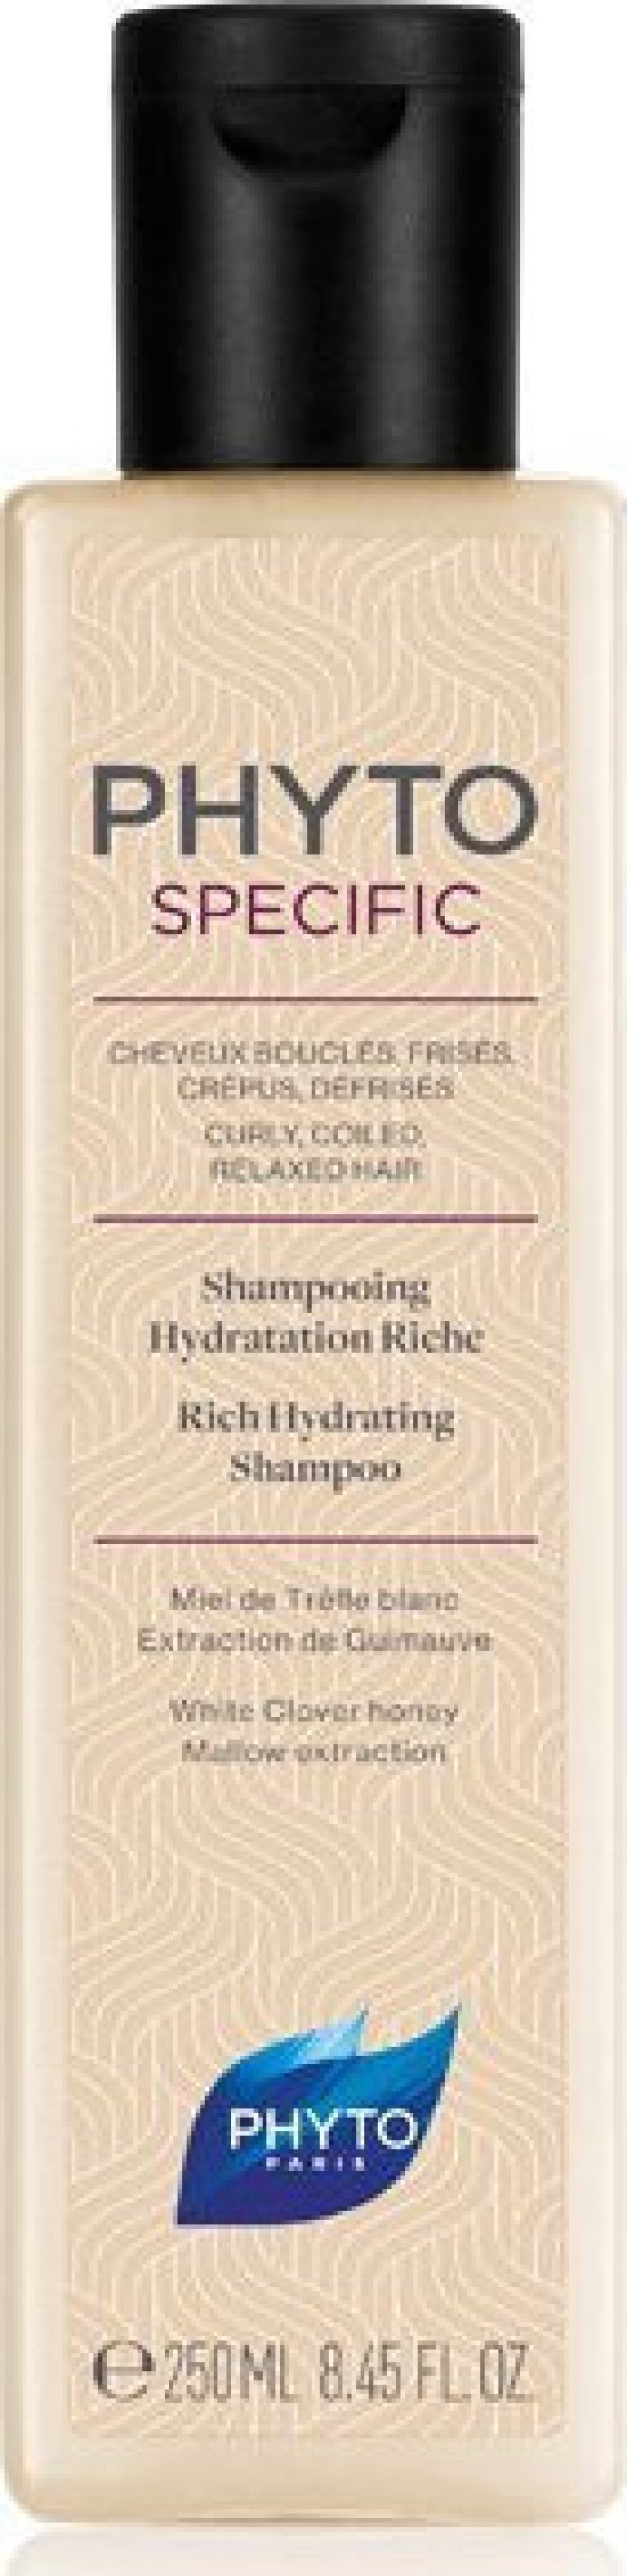 Phyto Specific Hydratation Riche Shampoo Για Σγουρά Μαλλιά 250ml